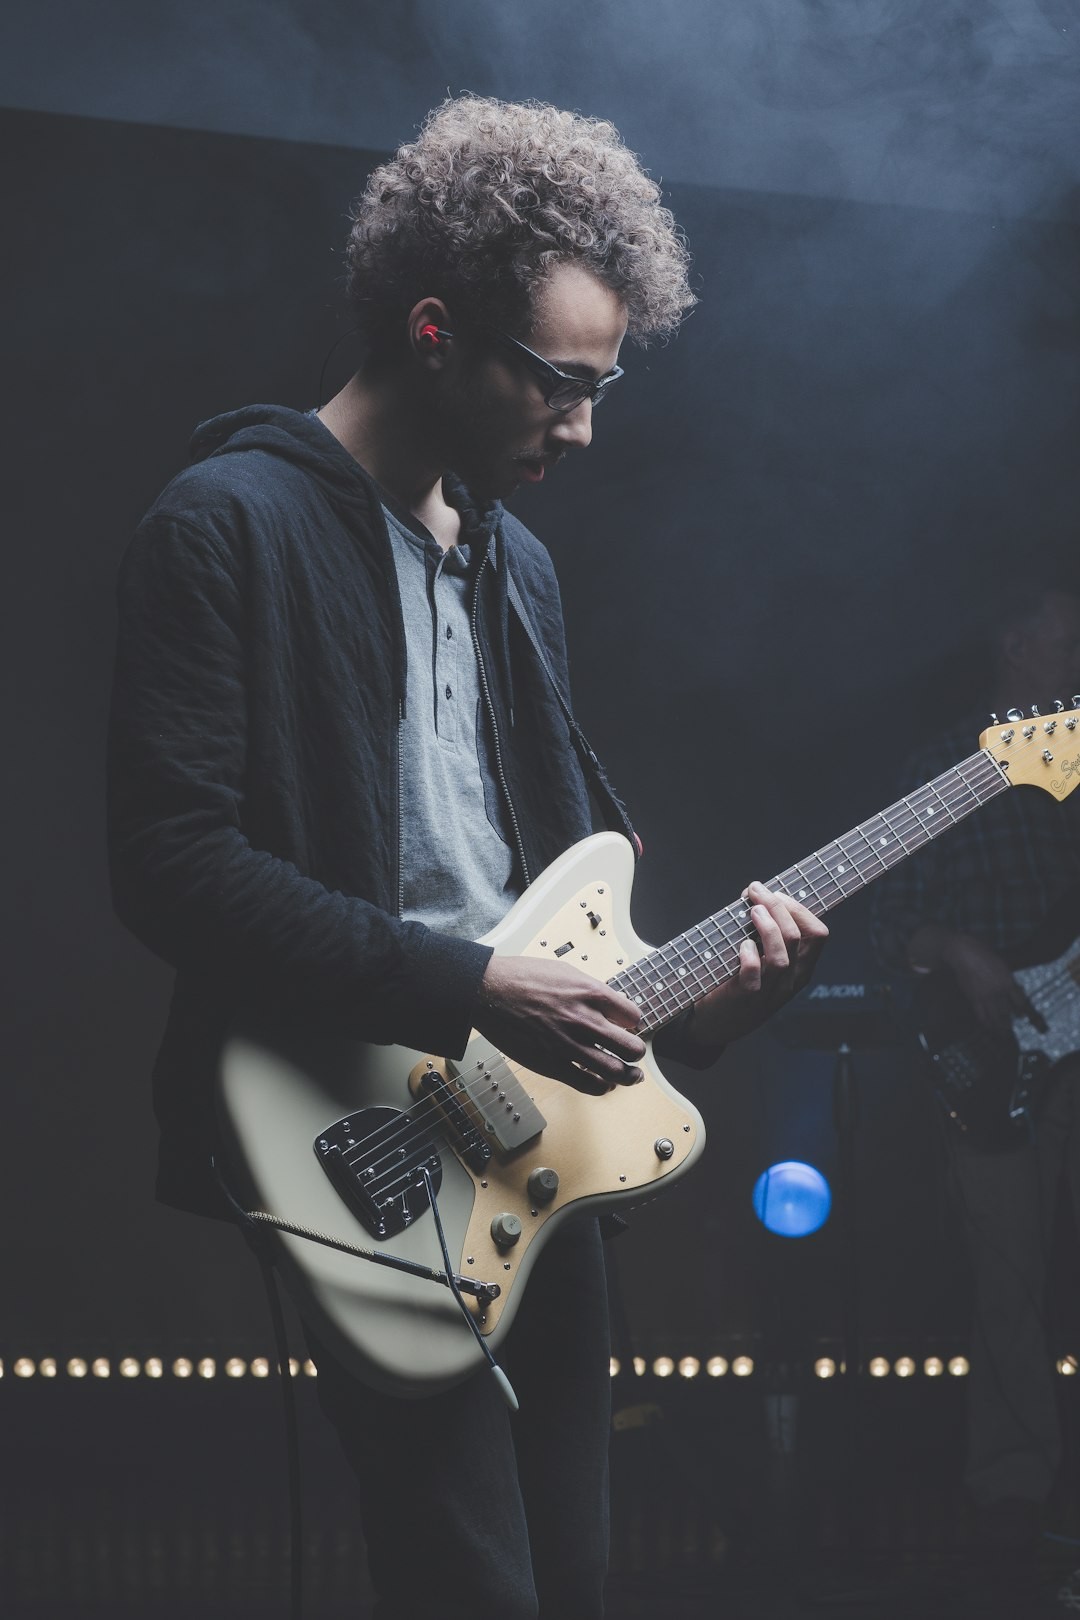 Guitarist in glasses performing live